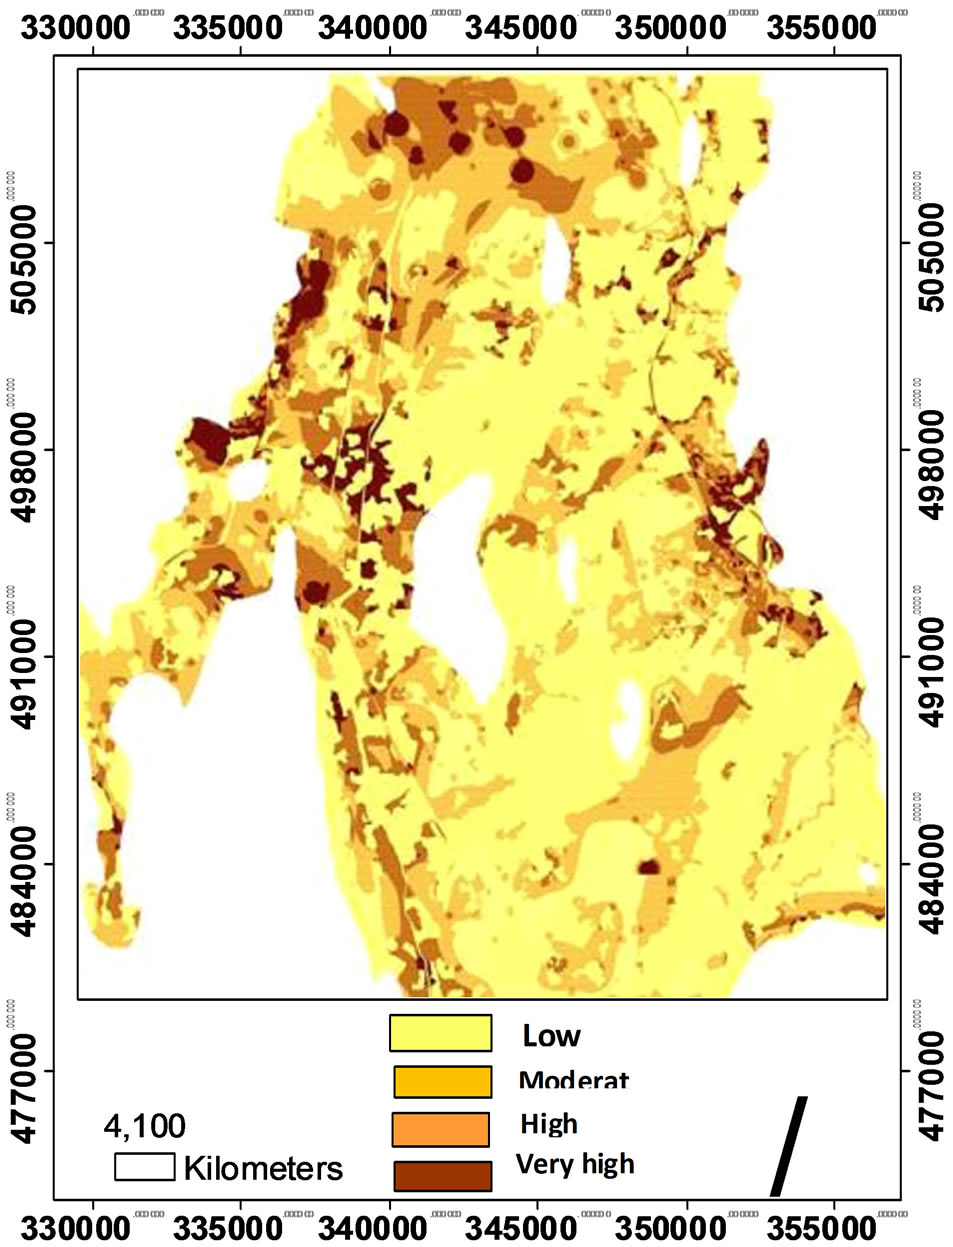 Geospatial Modeling For Sinkholes Hazard Map Based On Gis